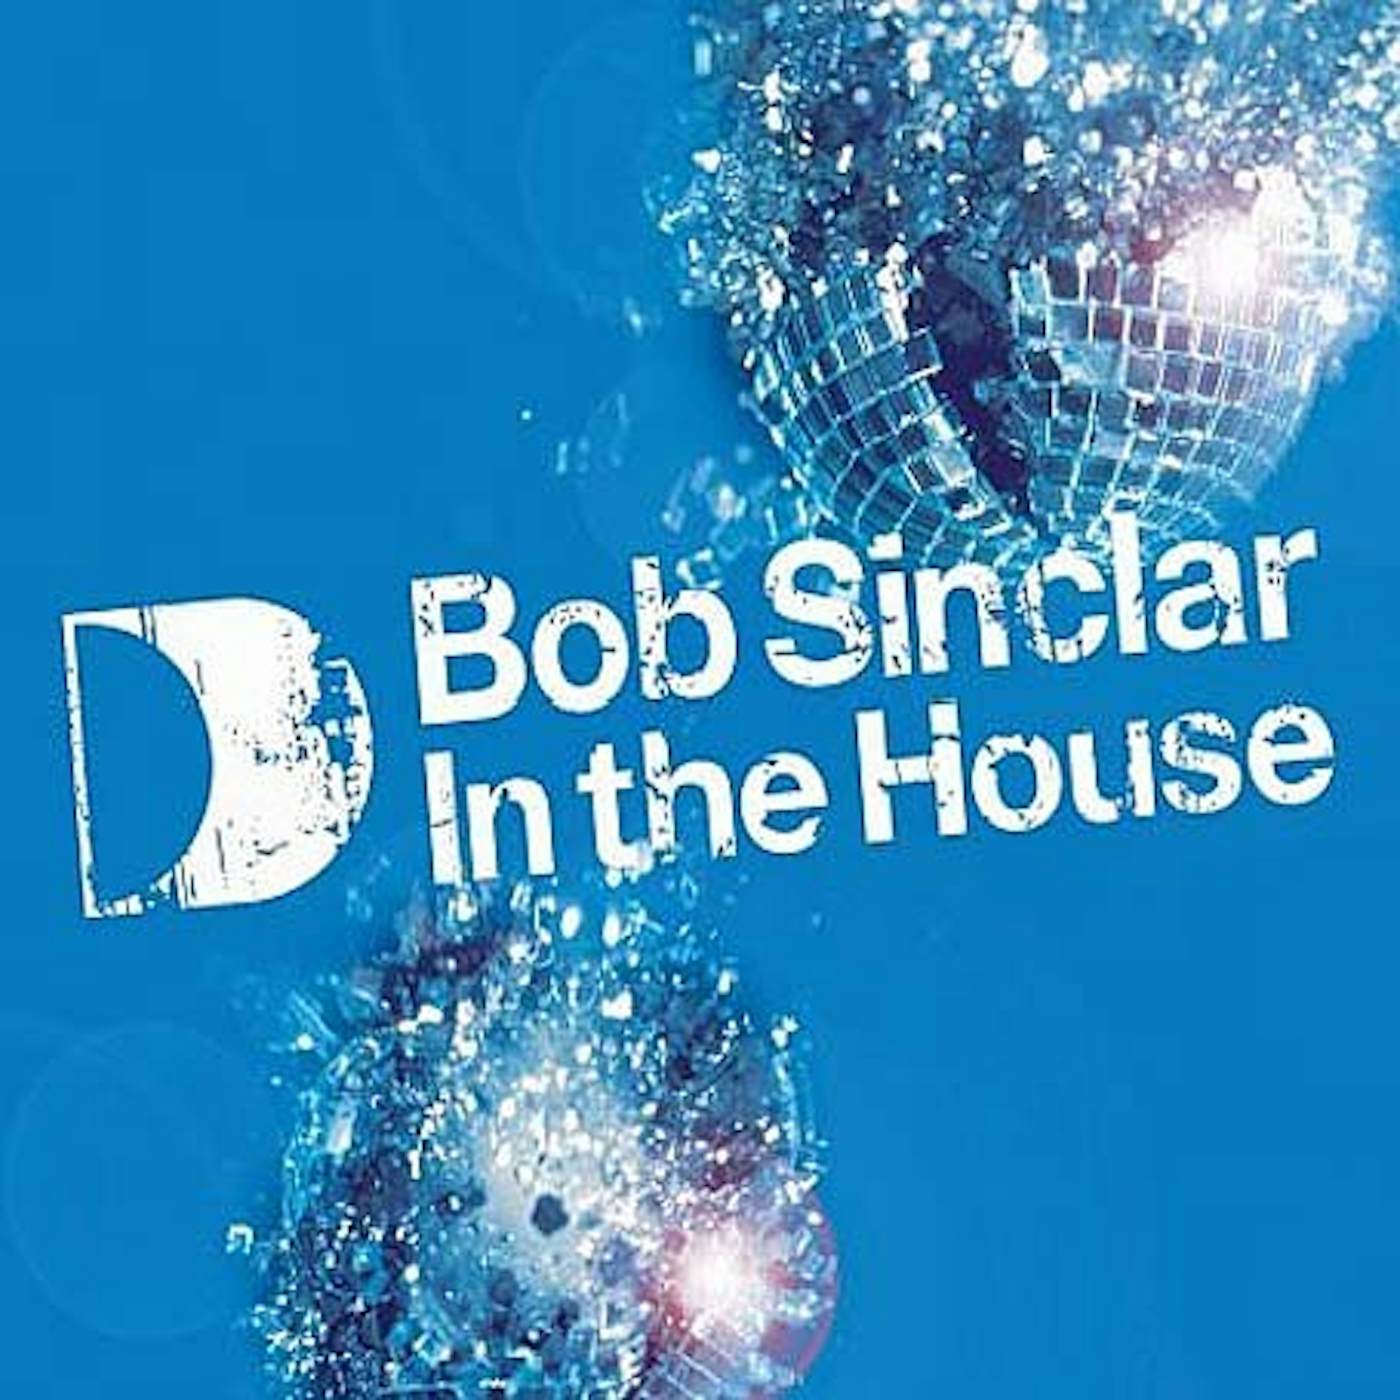 Bob Sinclar IN THE HOUSE 2 Vinyl Record